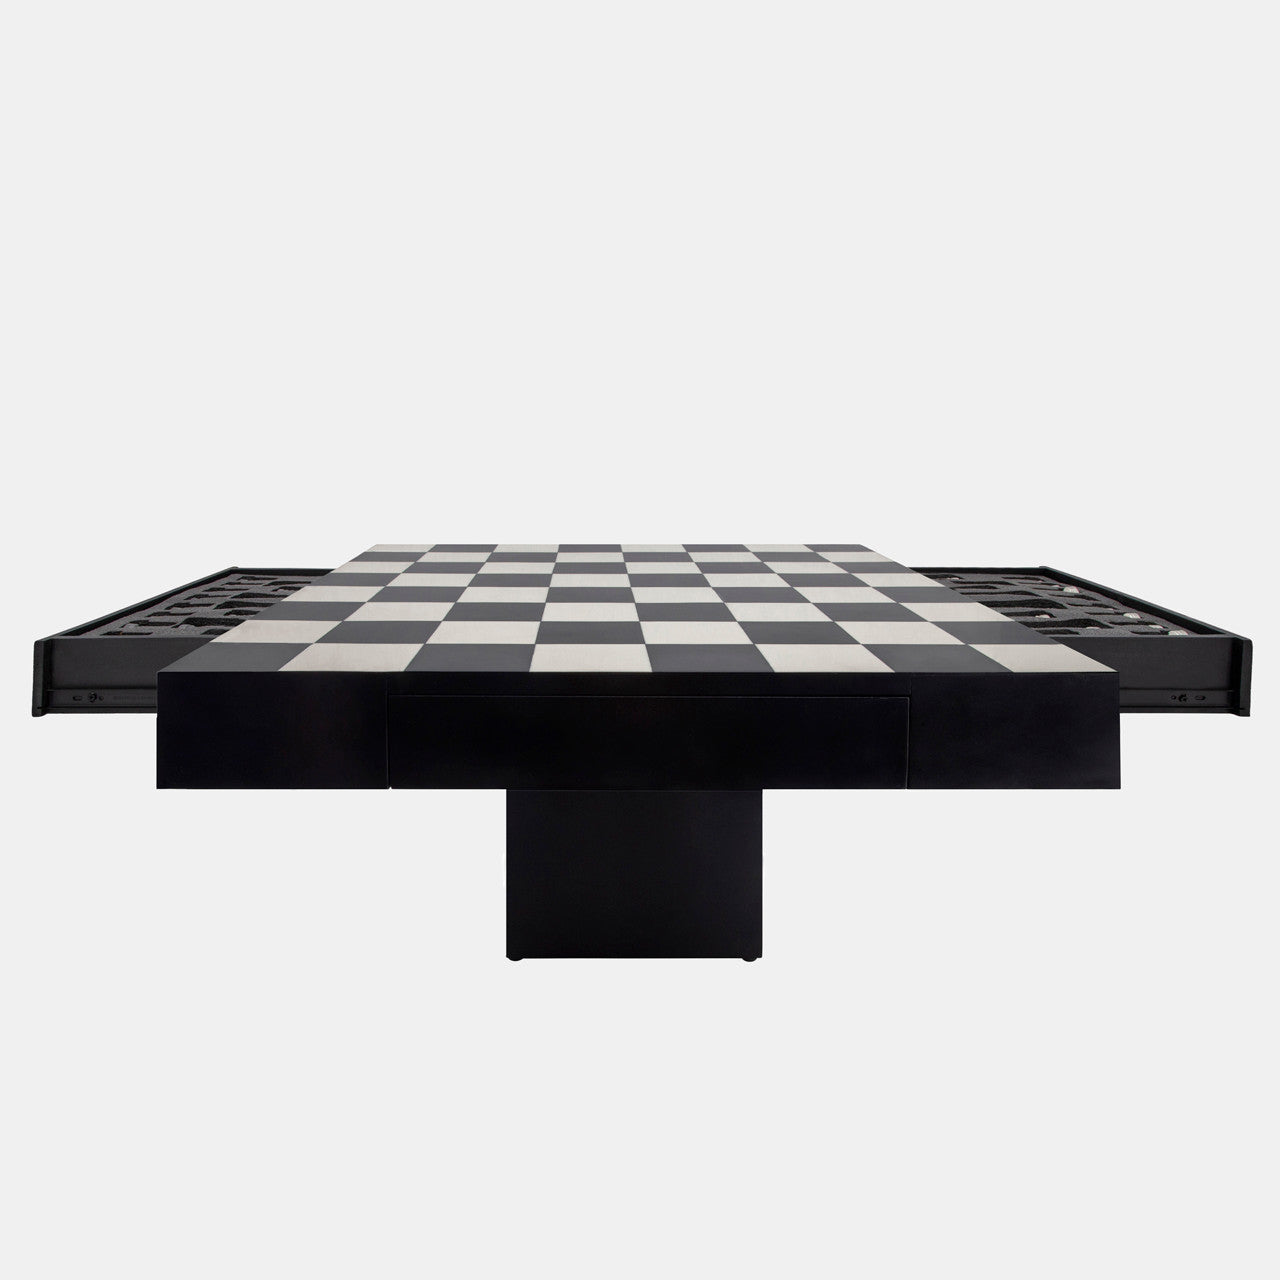 Resin Chess Set Table